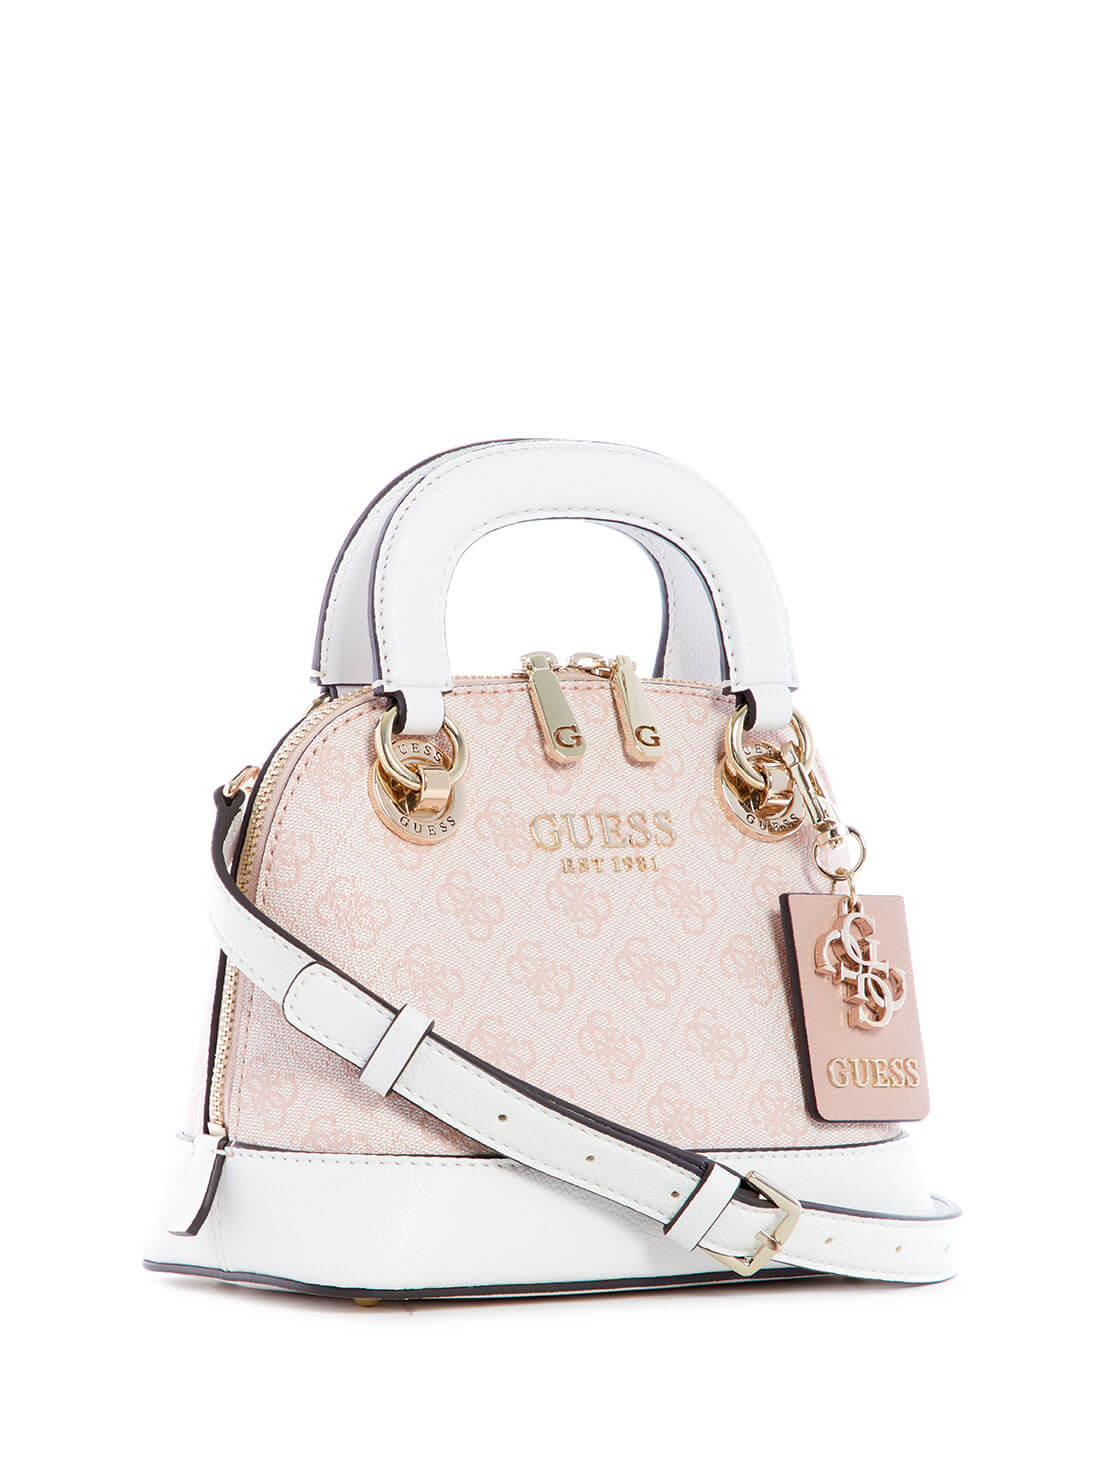 GUESS Handbags : Buy GUESS Blush Pink Cathleen Handbag Online